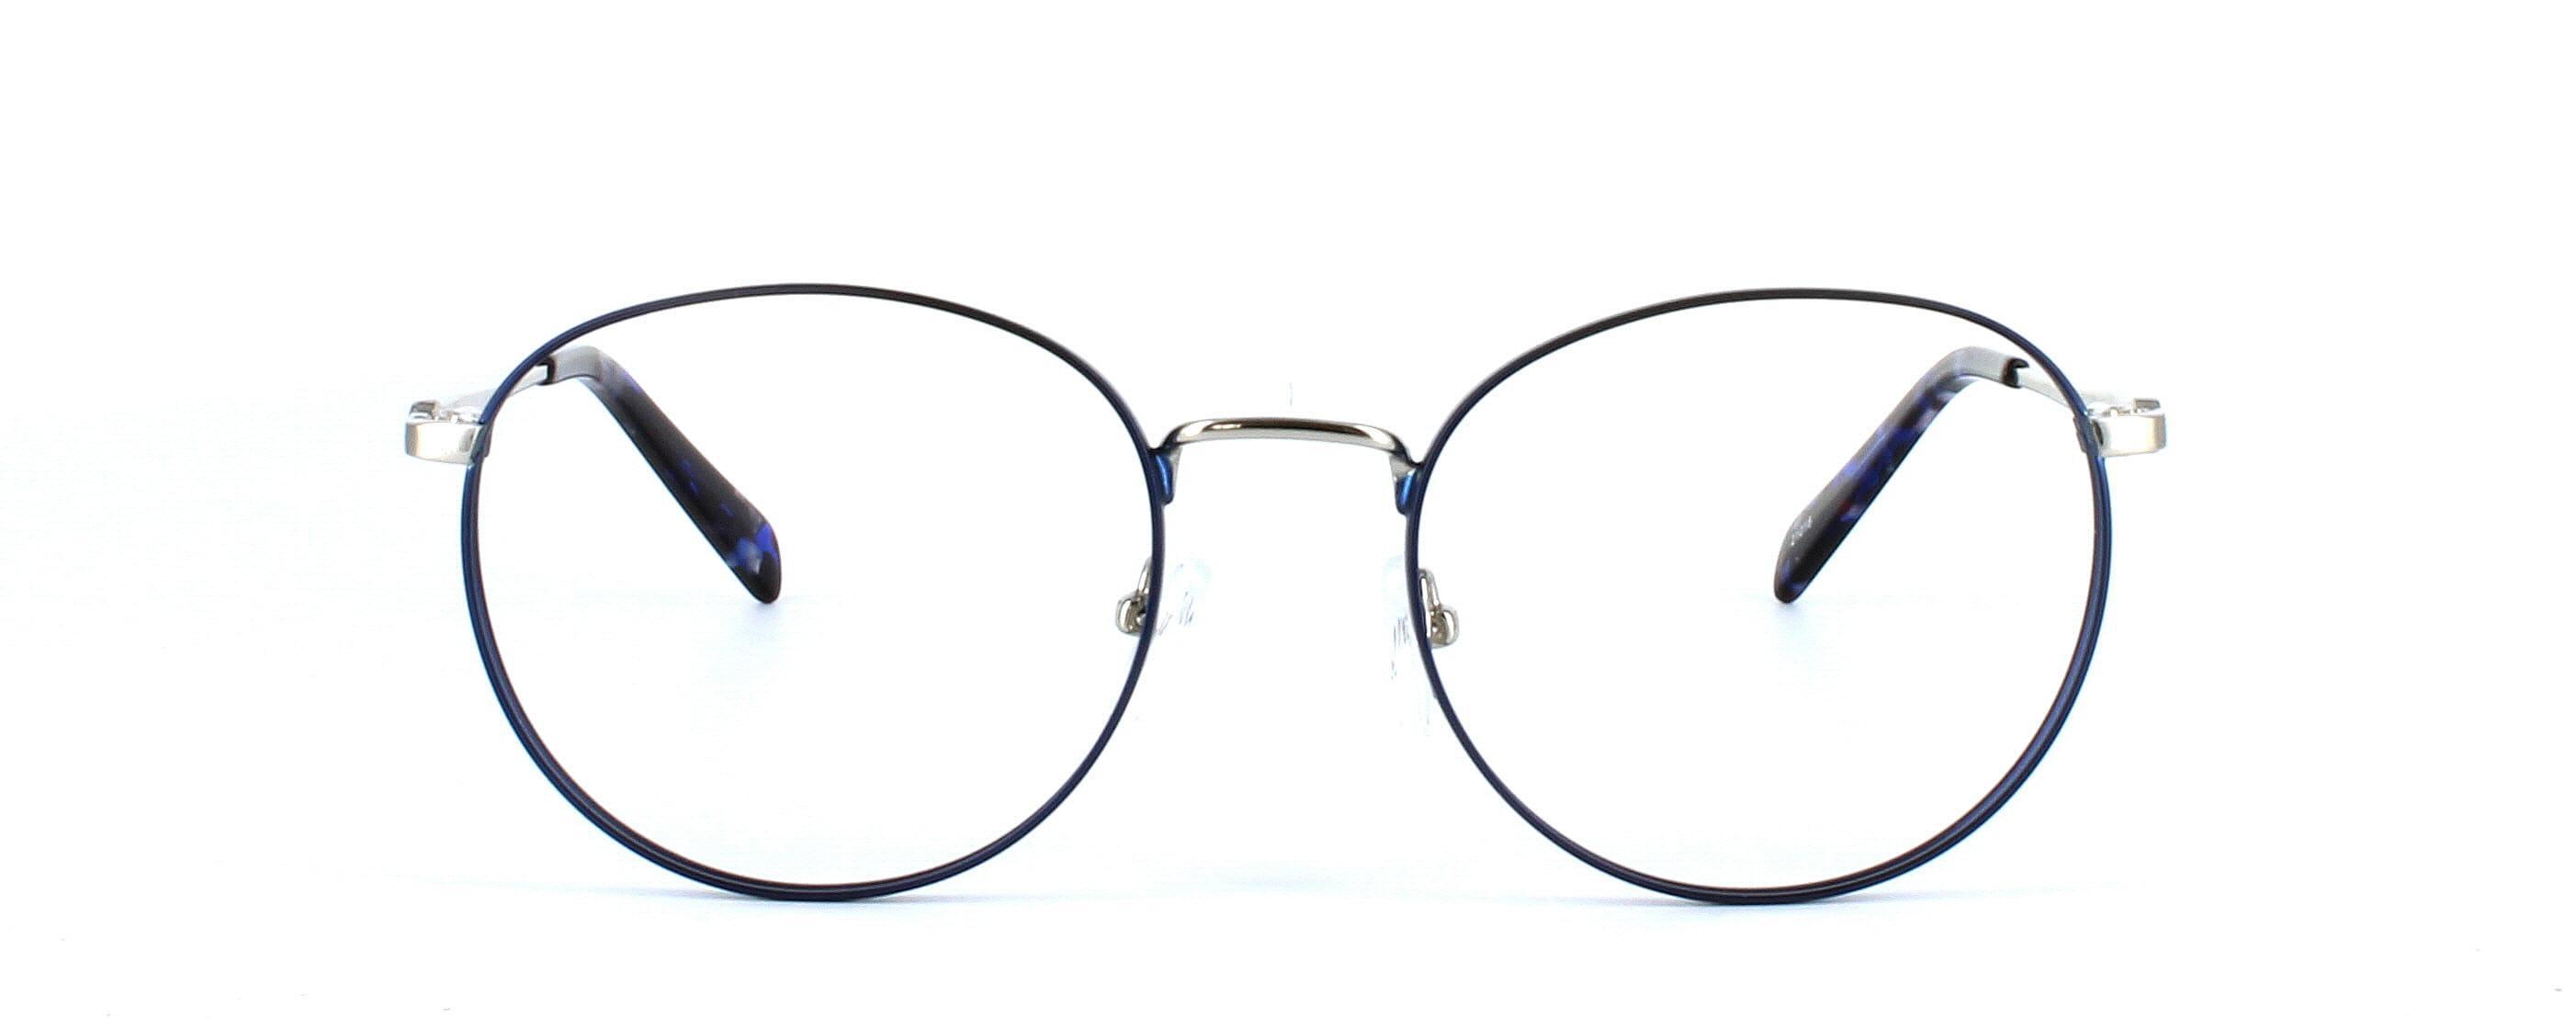 Borealis - Ladies 2-tone round metal glasses - blue & silver - image 5